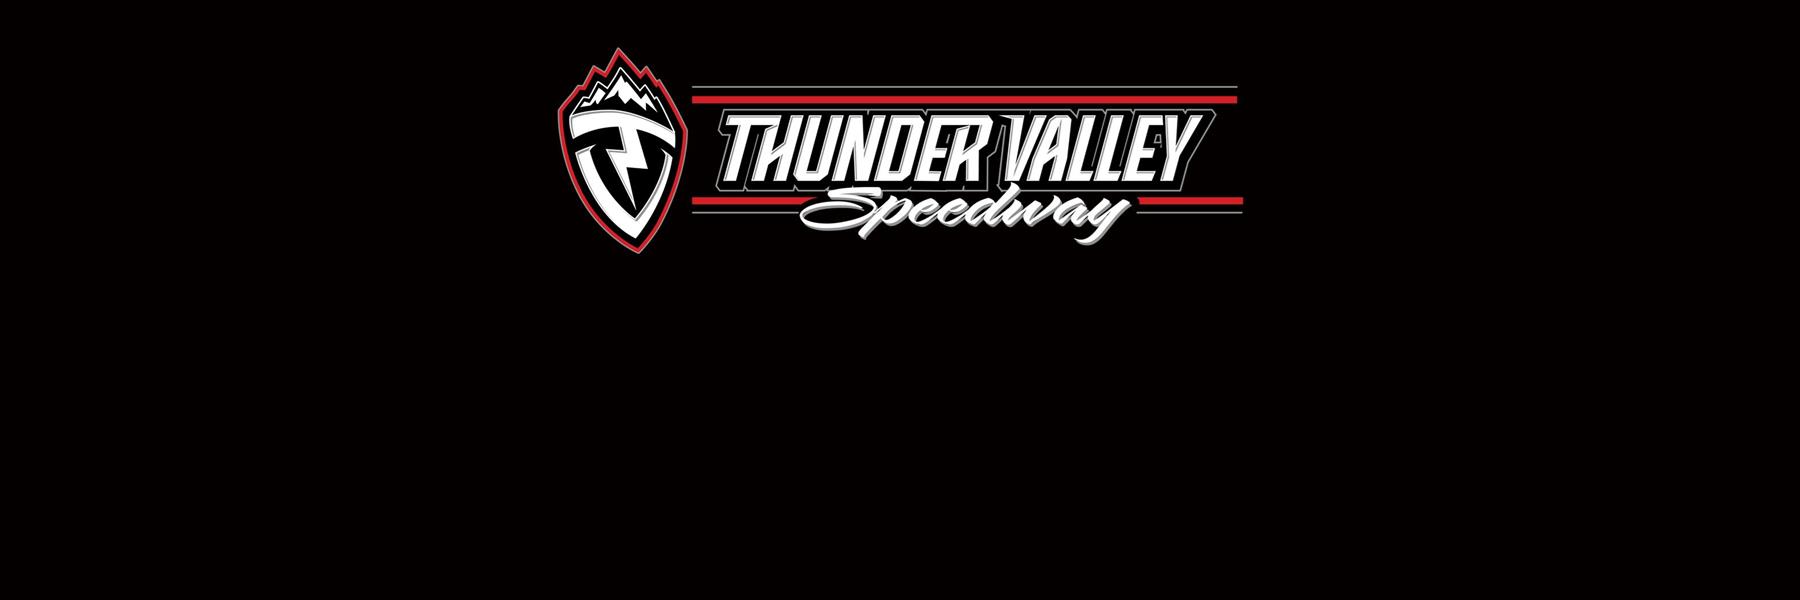 7/3/2016 - Thunder Valley Speedway (AK)